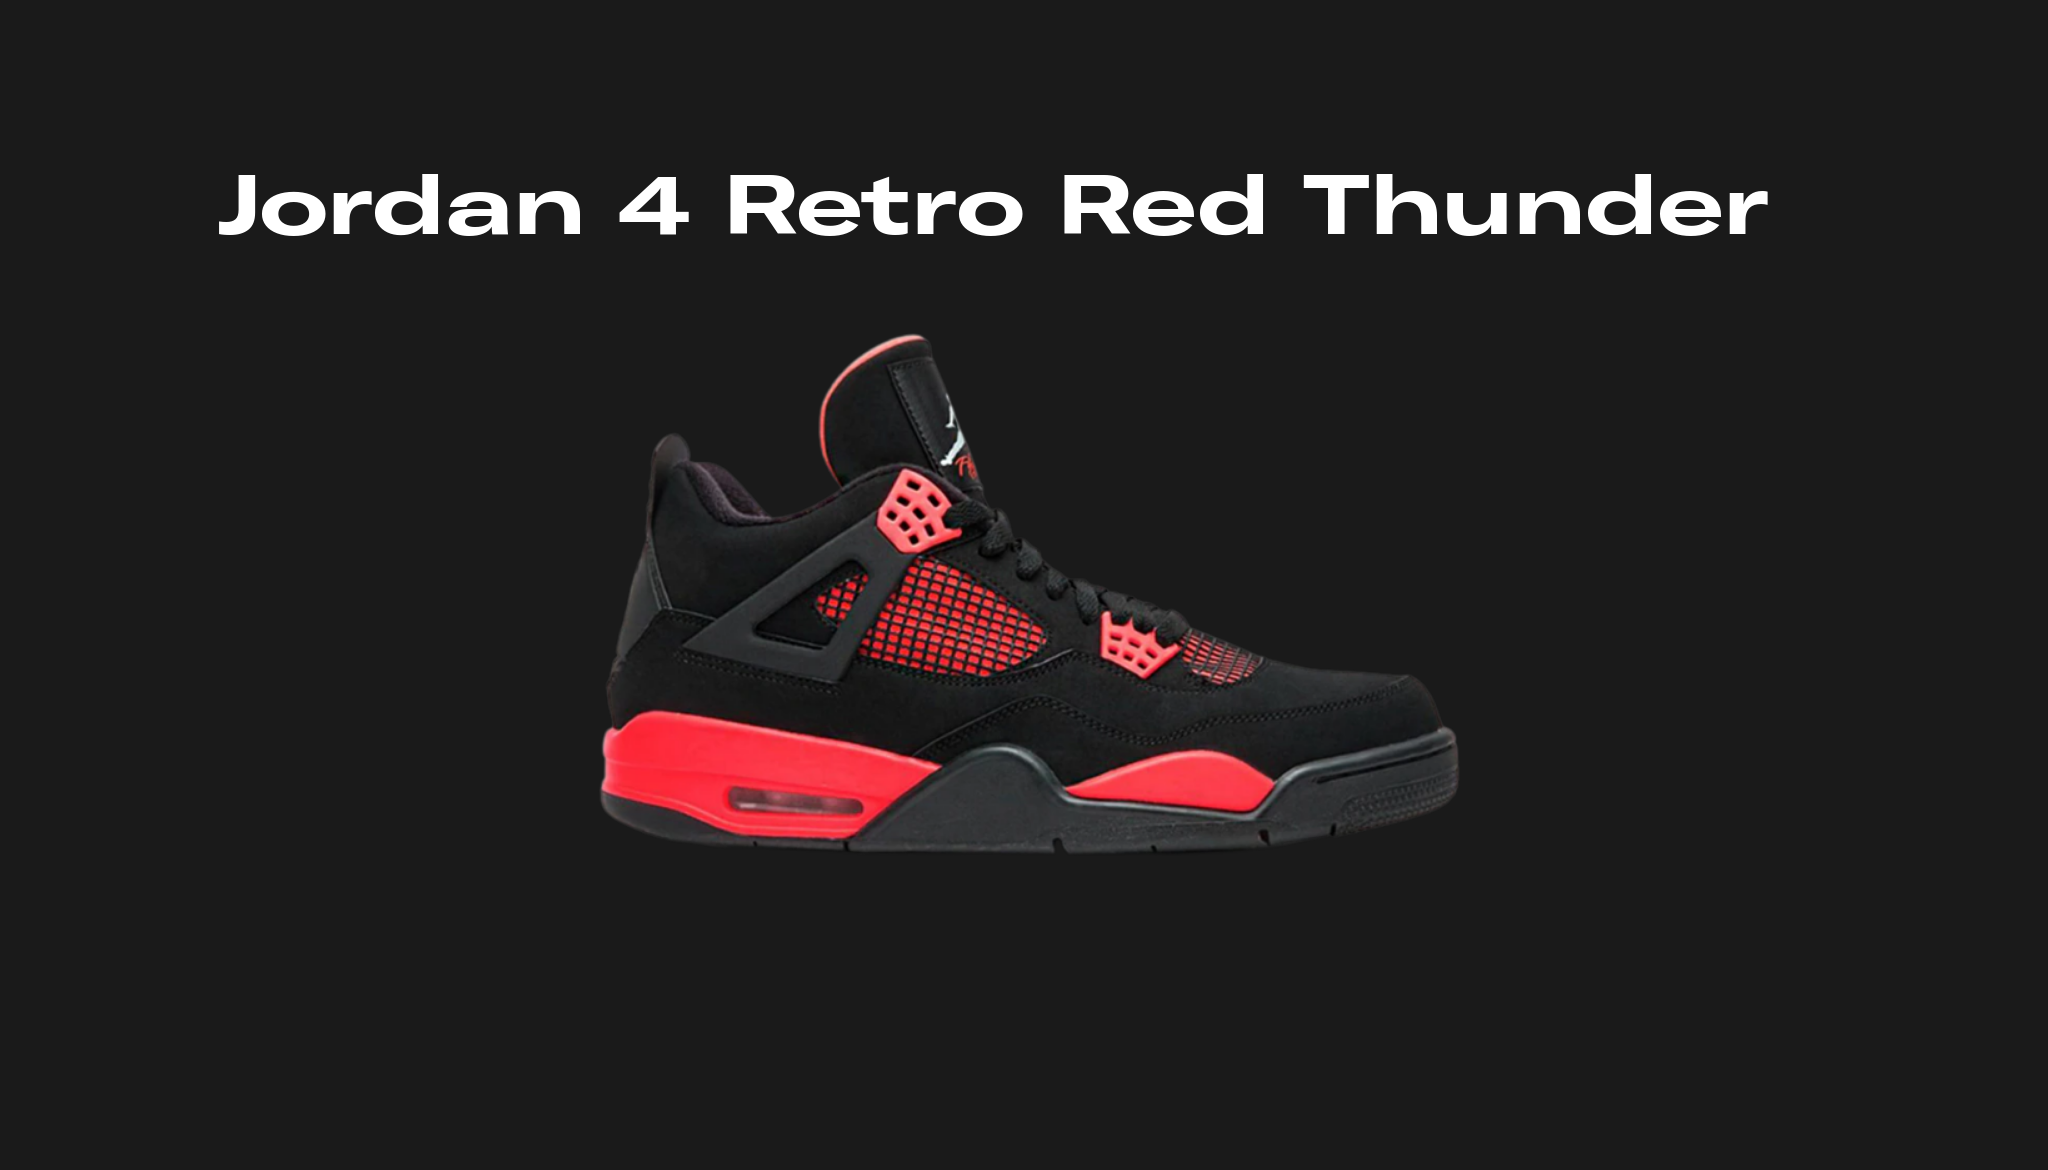 Jordan jordan 4 thunder red 4 Retro Red Thunder, Raffles and Release Date | Sole Retriever